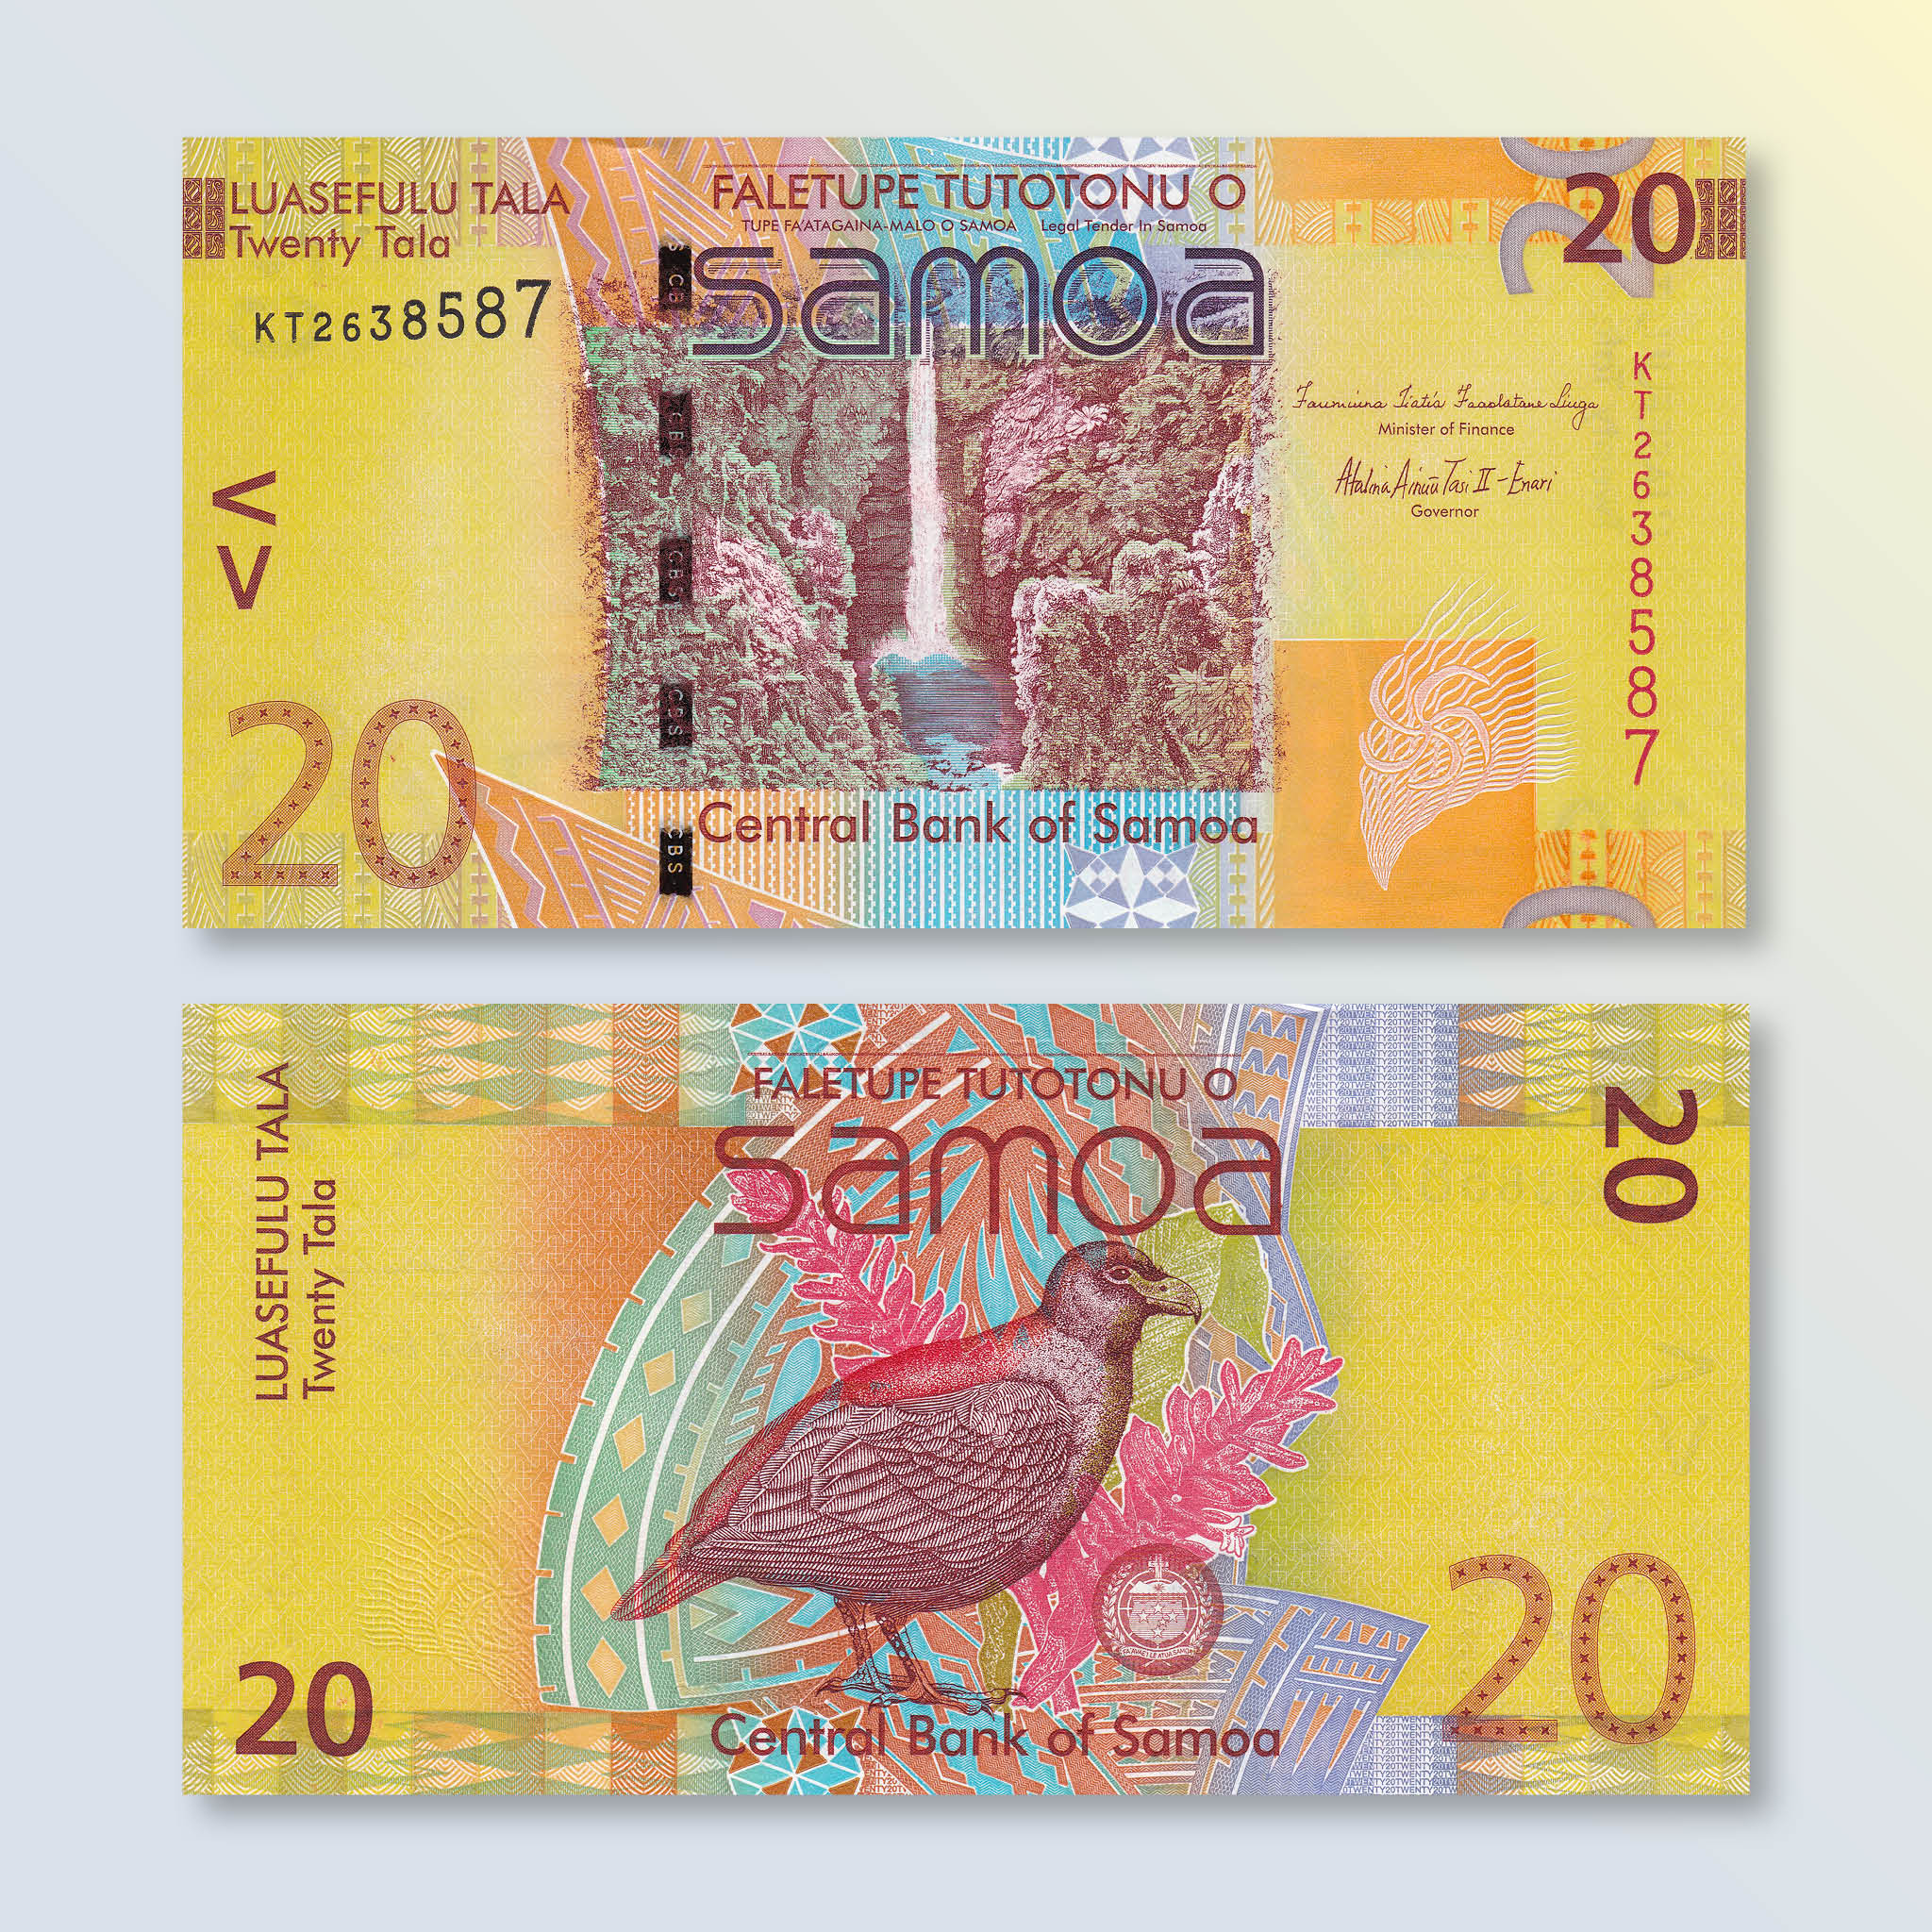 Samoa 20 Tālā, 2012, B115b, P40b, IBNS Banknote of the Year 2008, UNC - Robert's World Money - World Banknotes